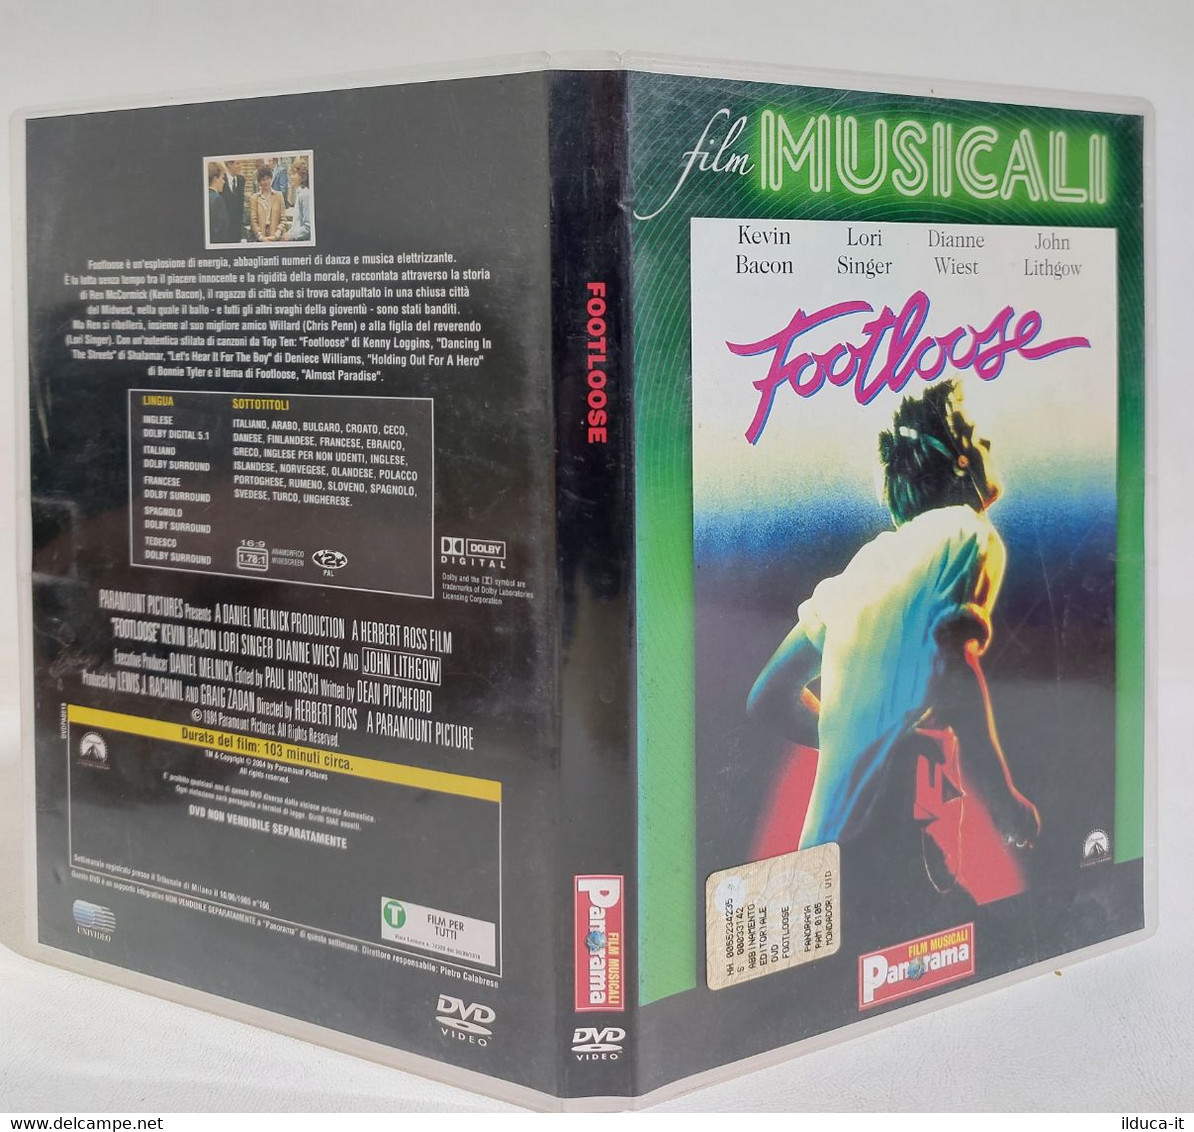 I108655 DVD - FOOTLOOSE (1984) - Kevin Bacon / Lori SInger - Comedias Musicales